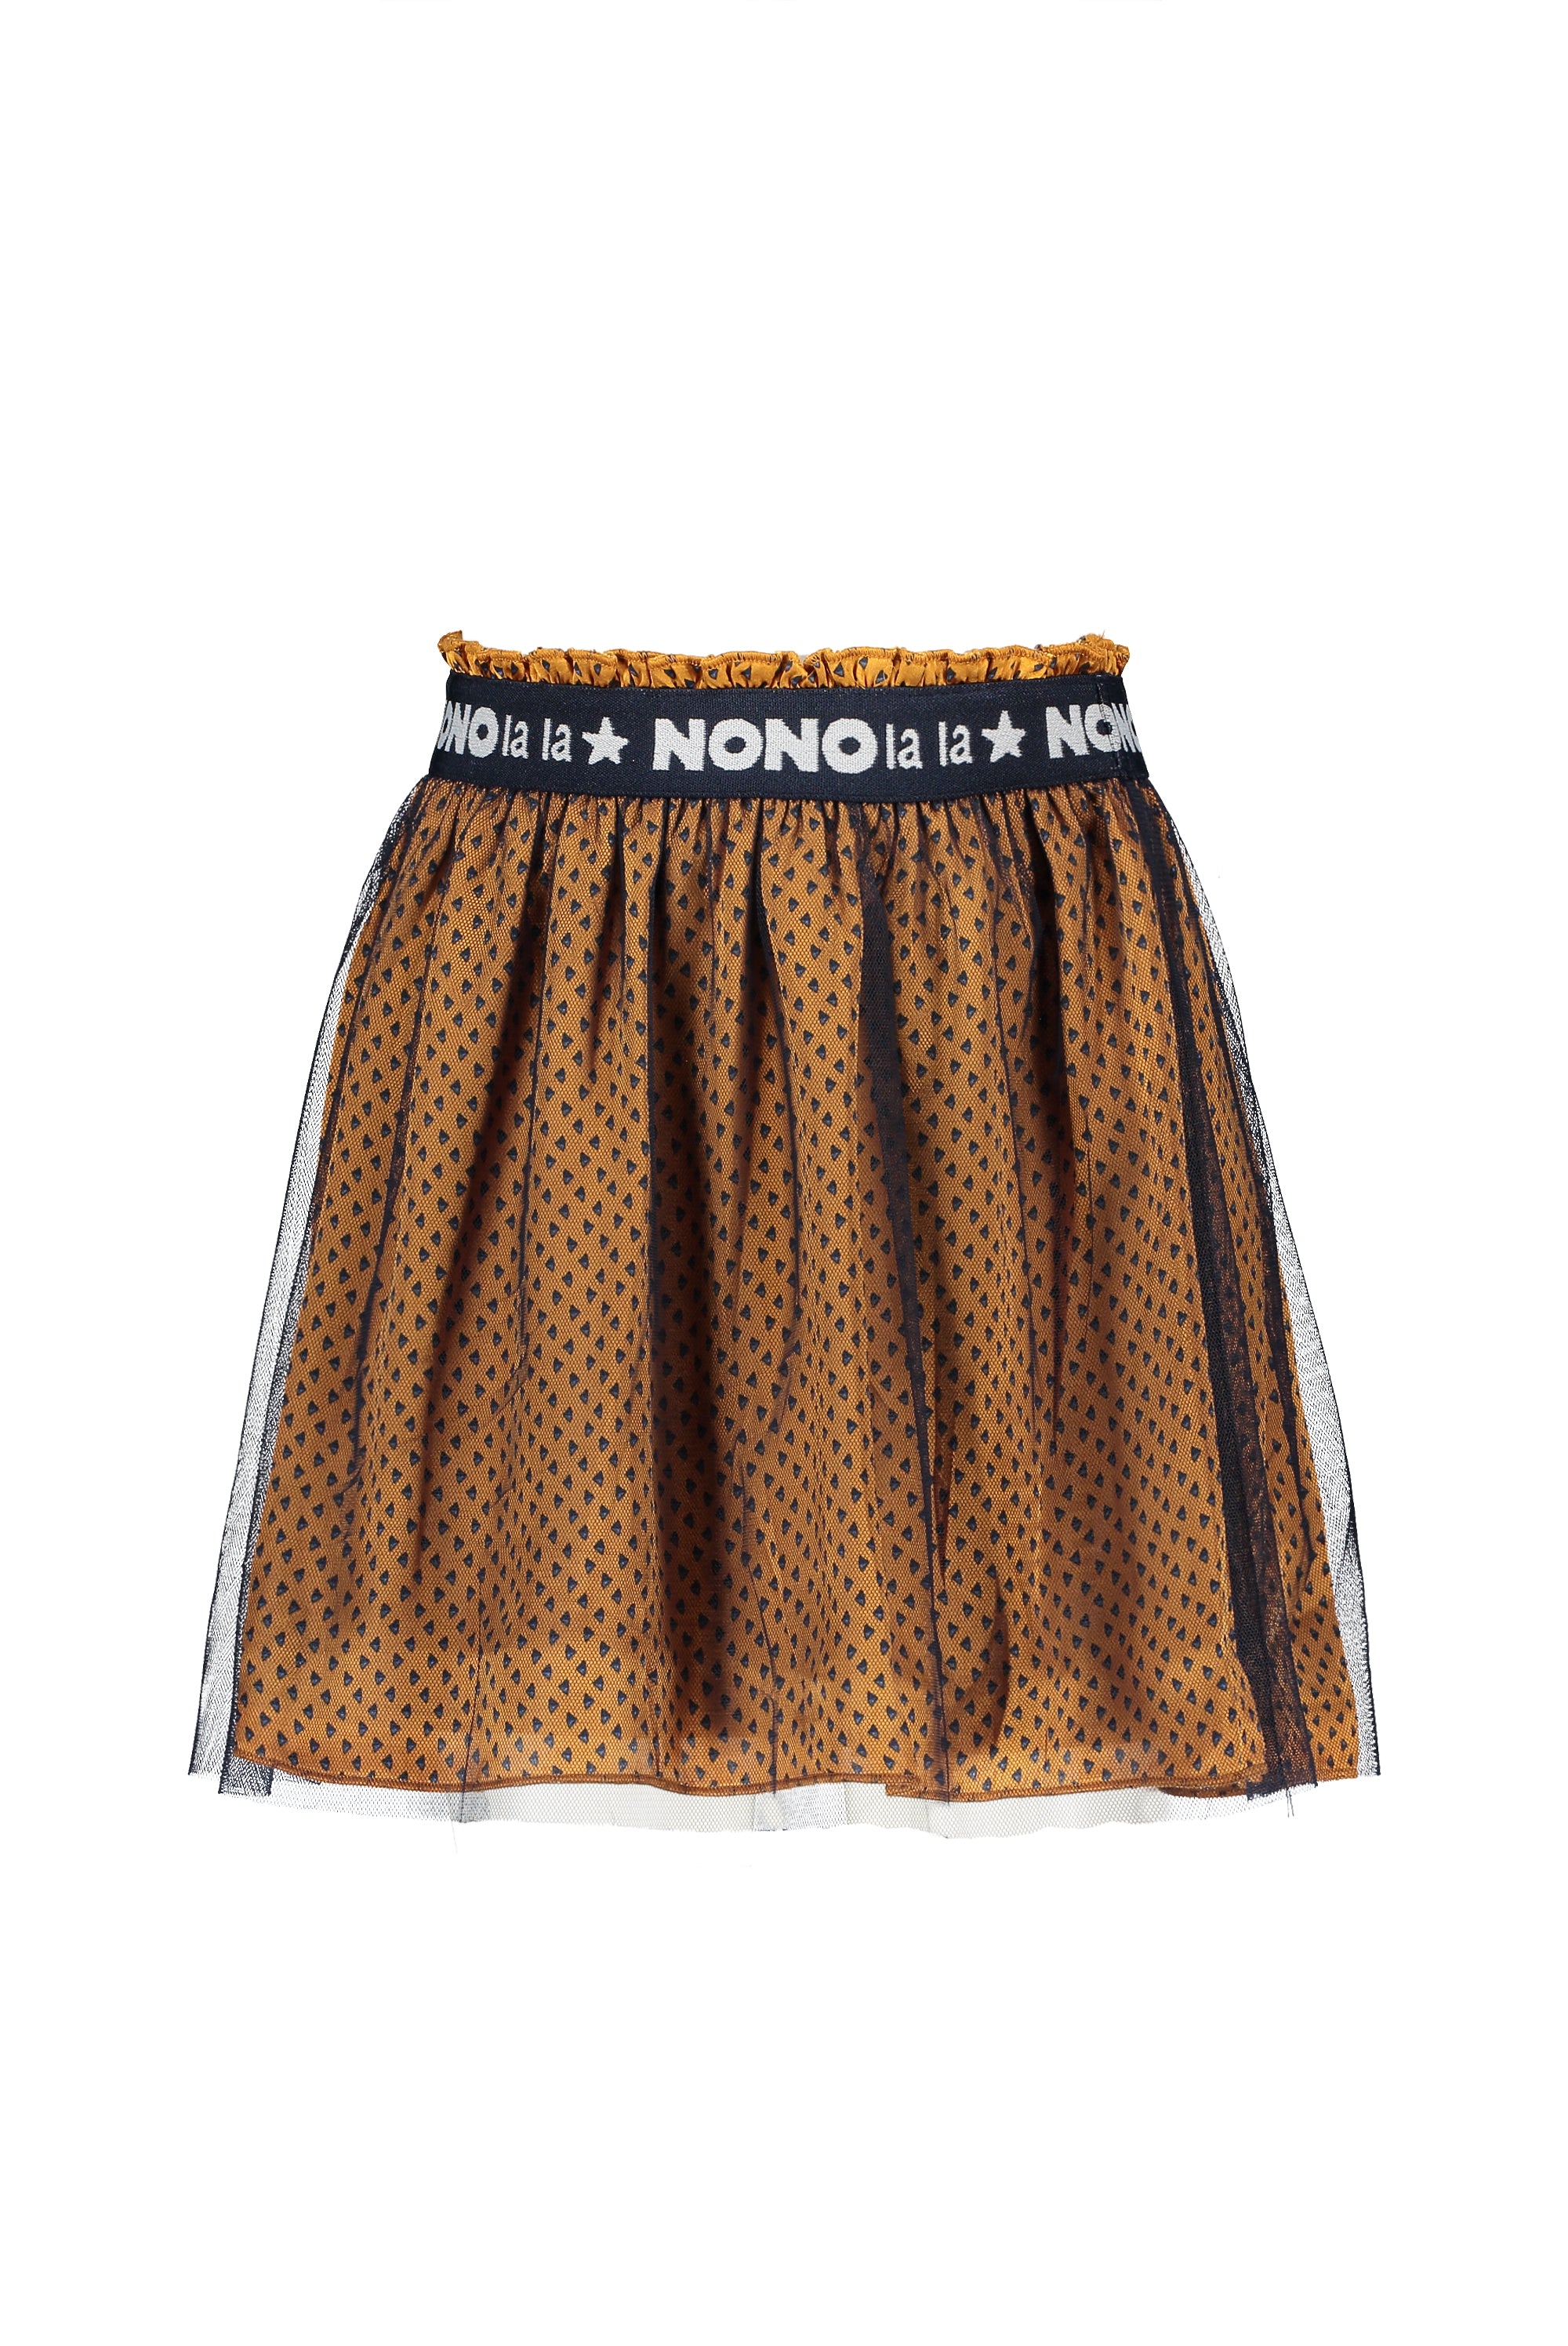 NoNo Nola short triangle aop skirt with mesh layer